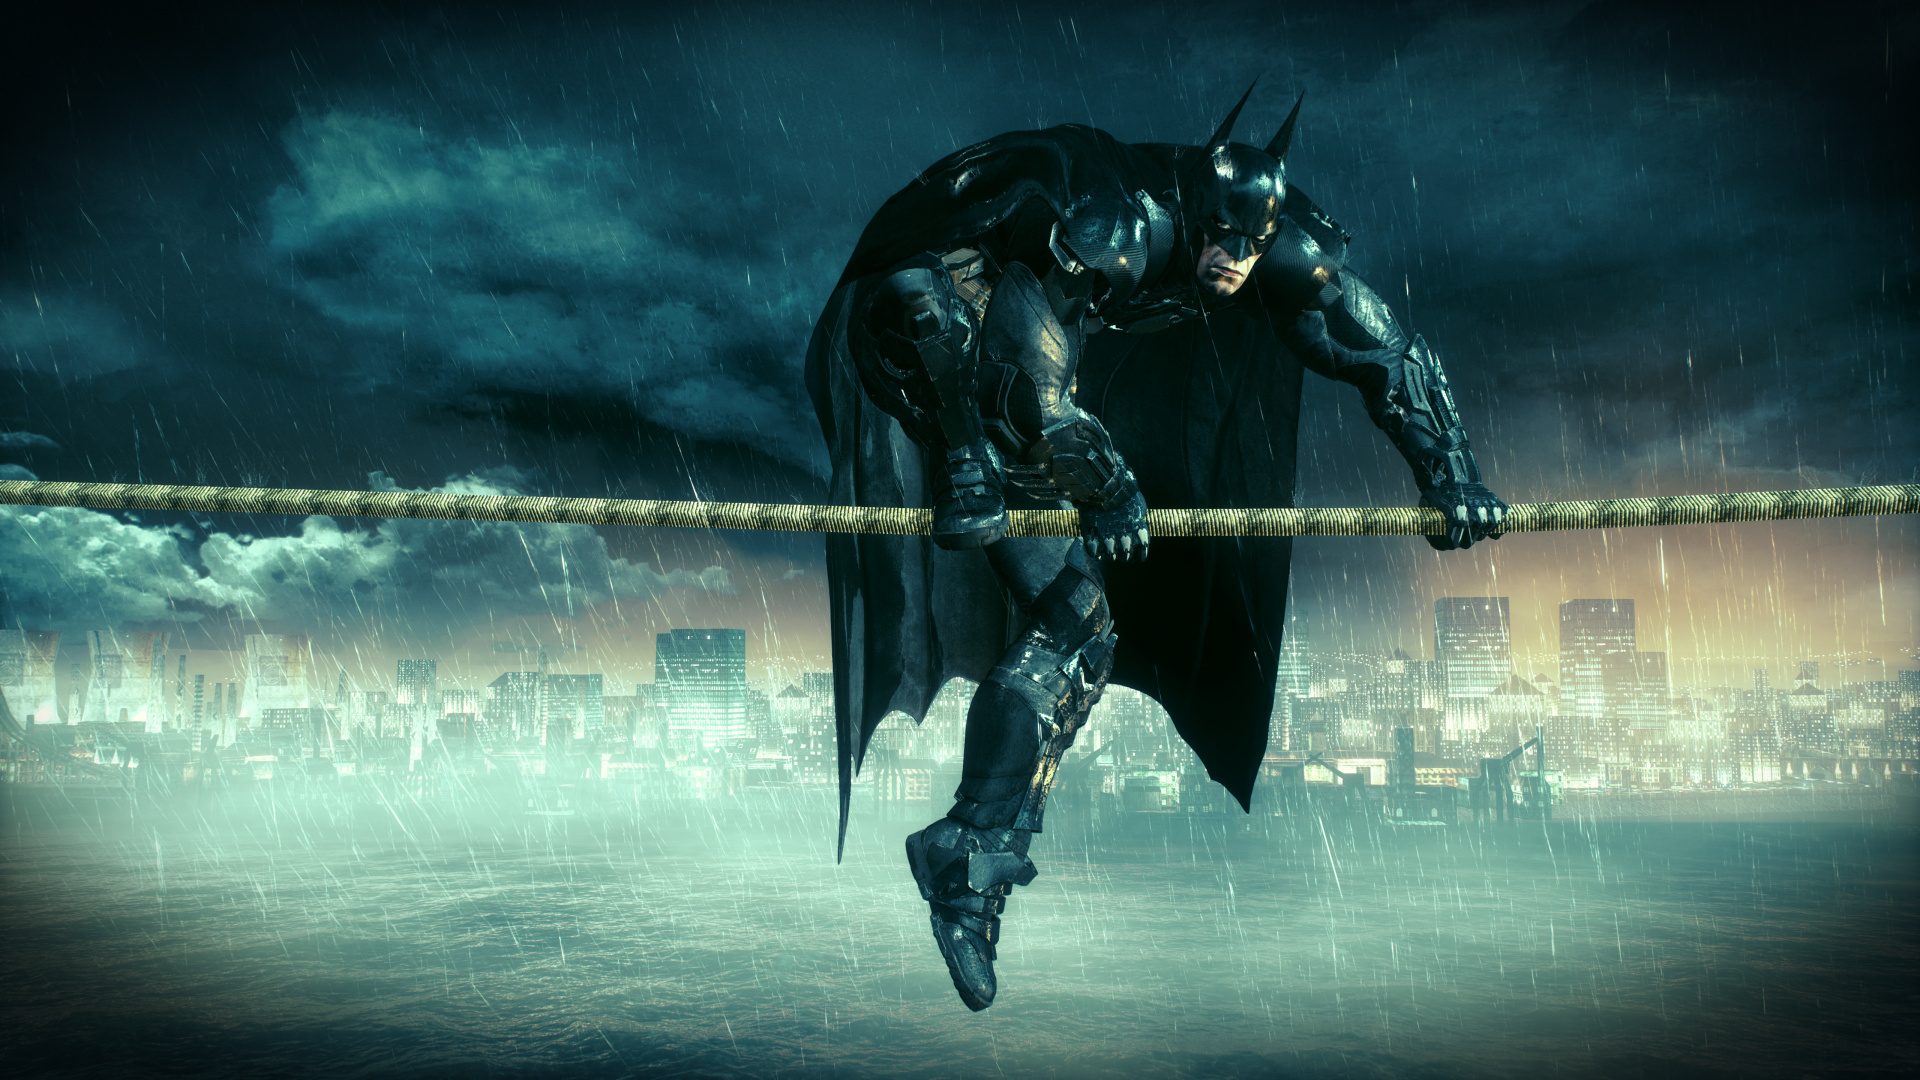 Batman Arkham Knight Full HD, HDTV, 1080p 16:9 Wallpapers, HD Batman Arkham  Knight 1920x1080 Backgrounds, Free Images Download